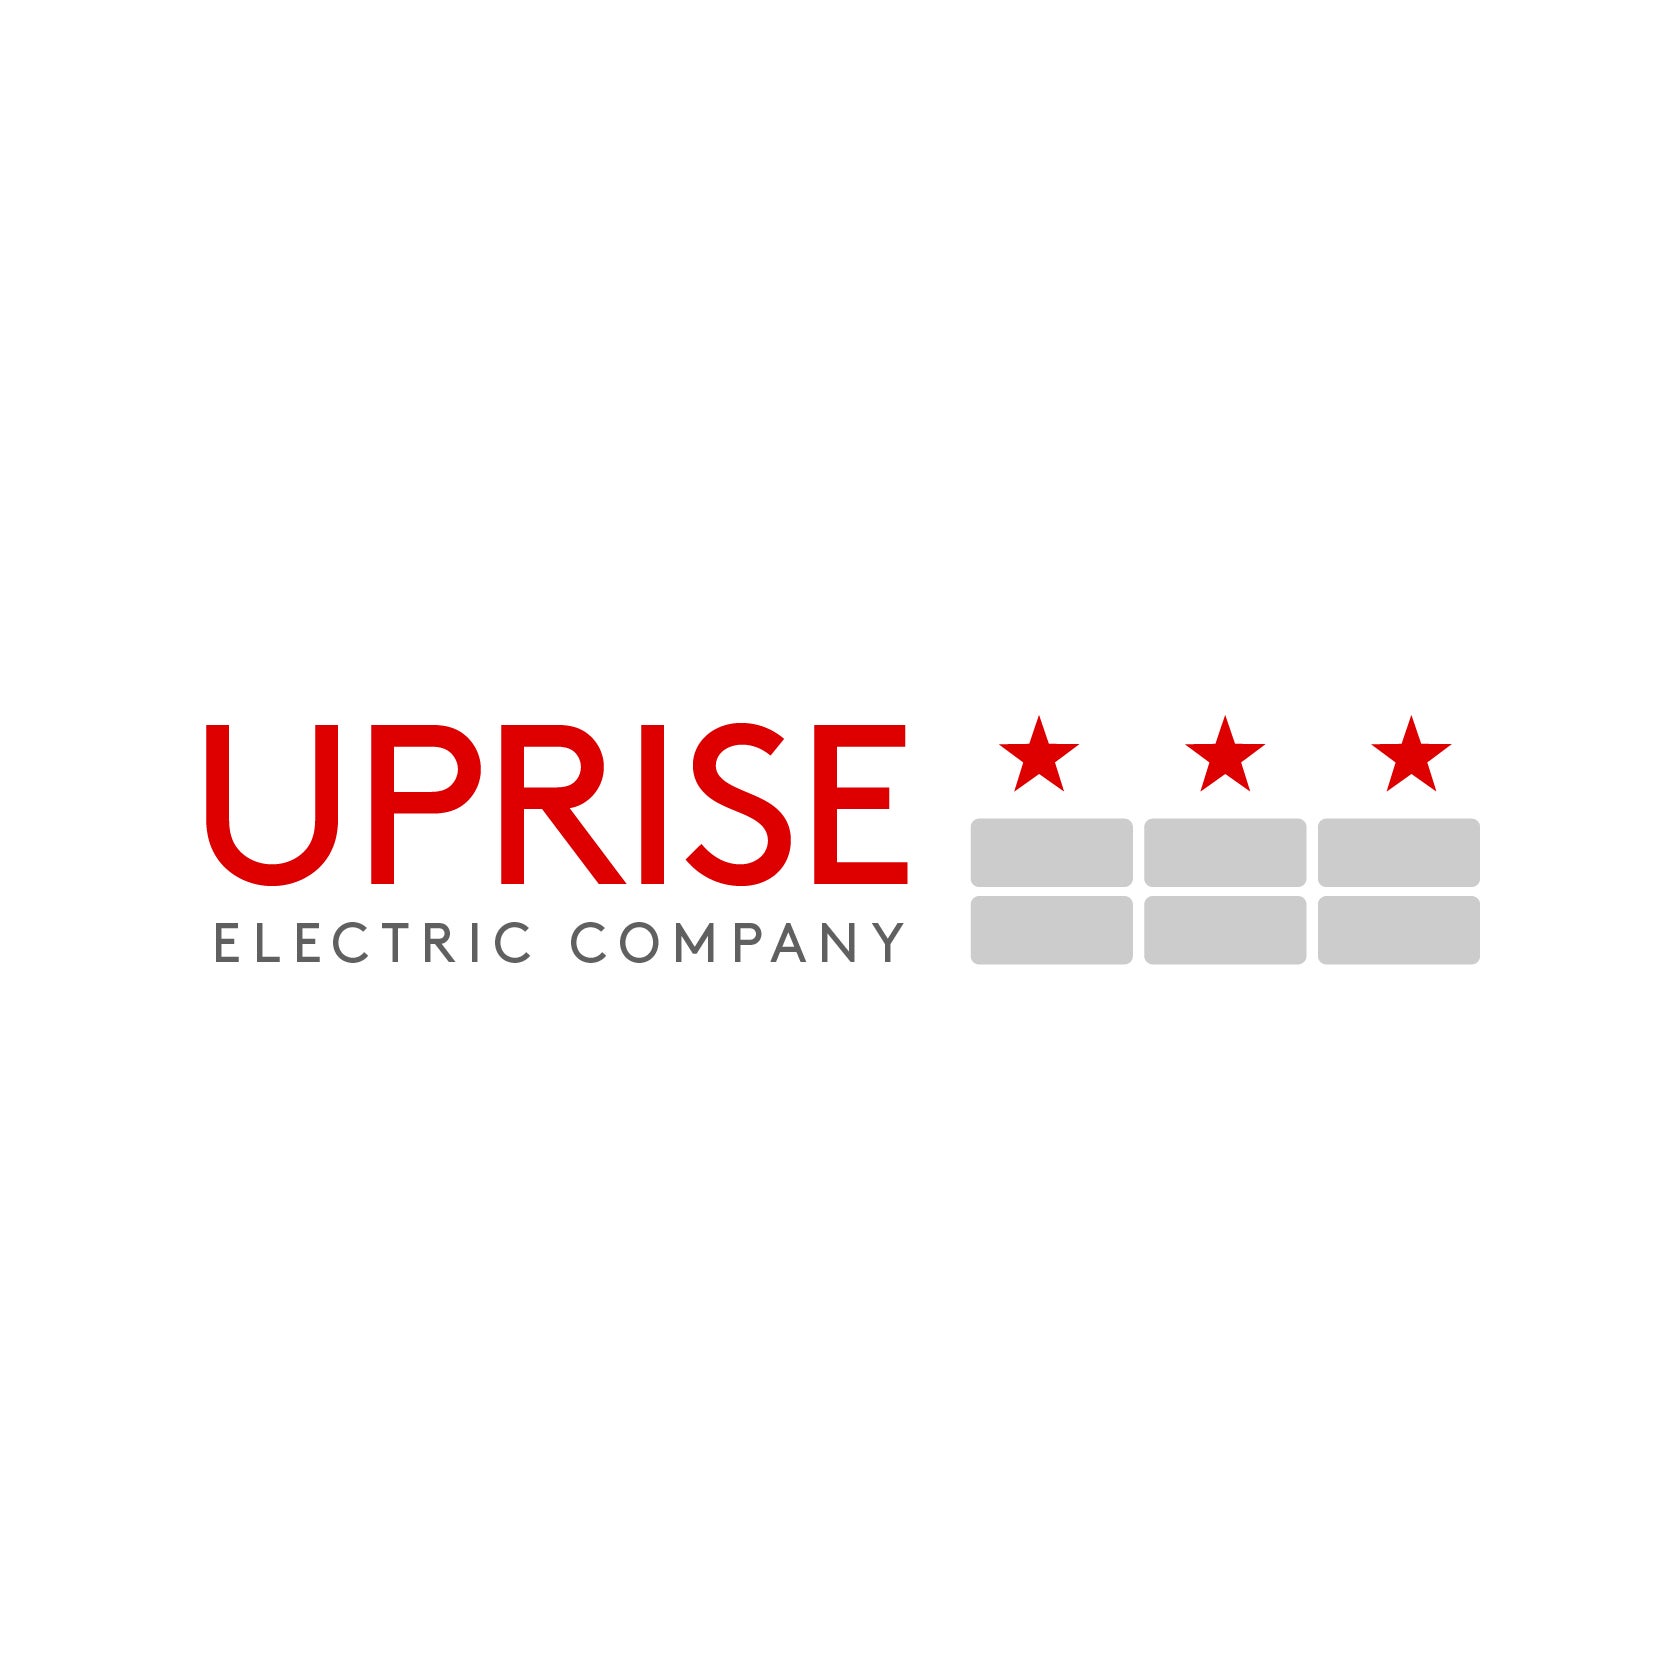 Uprise Electric Company logo